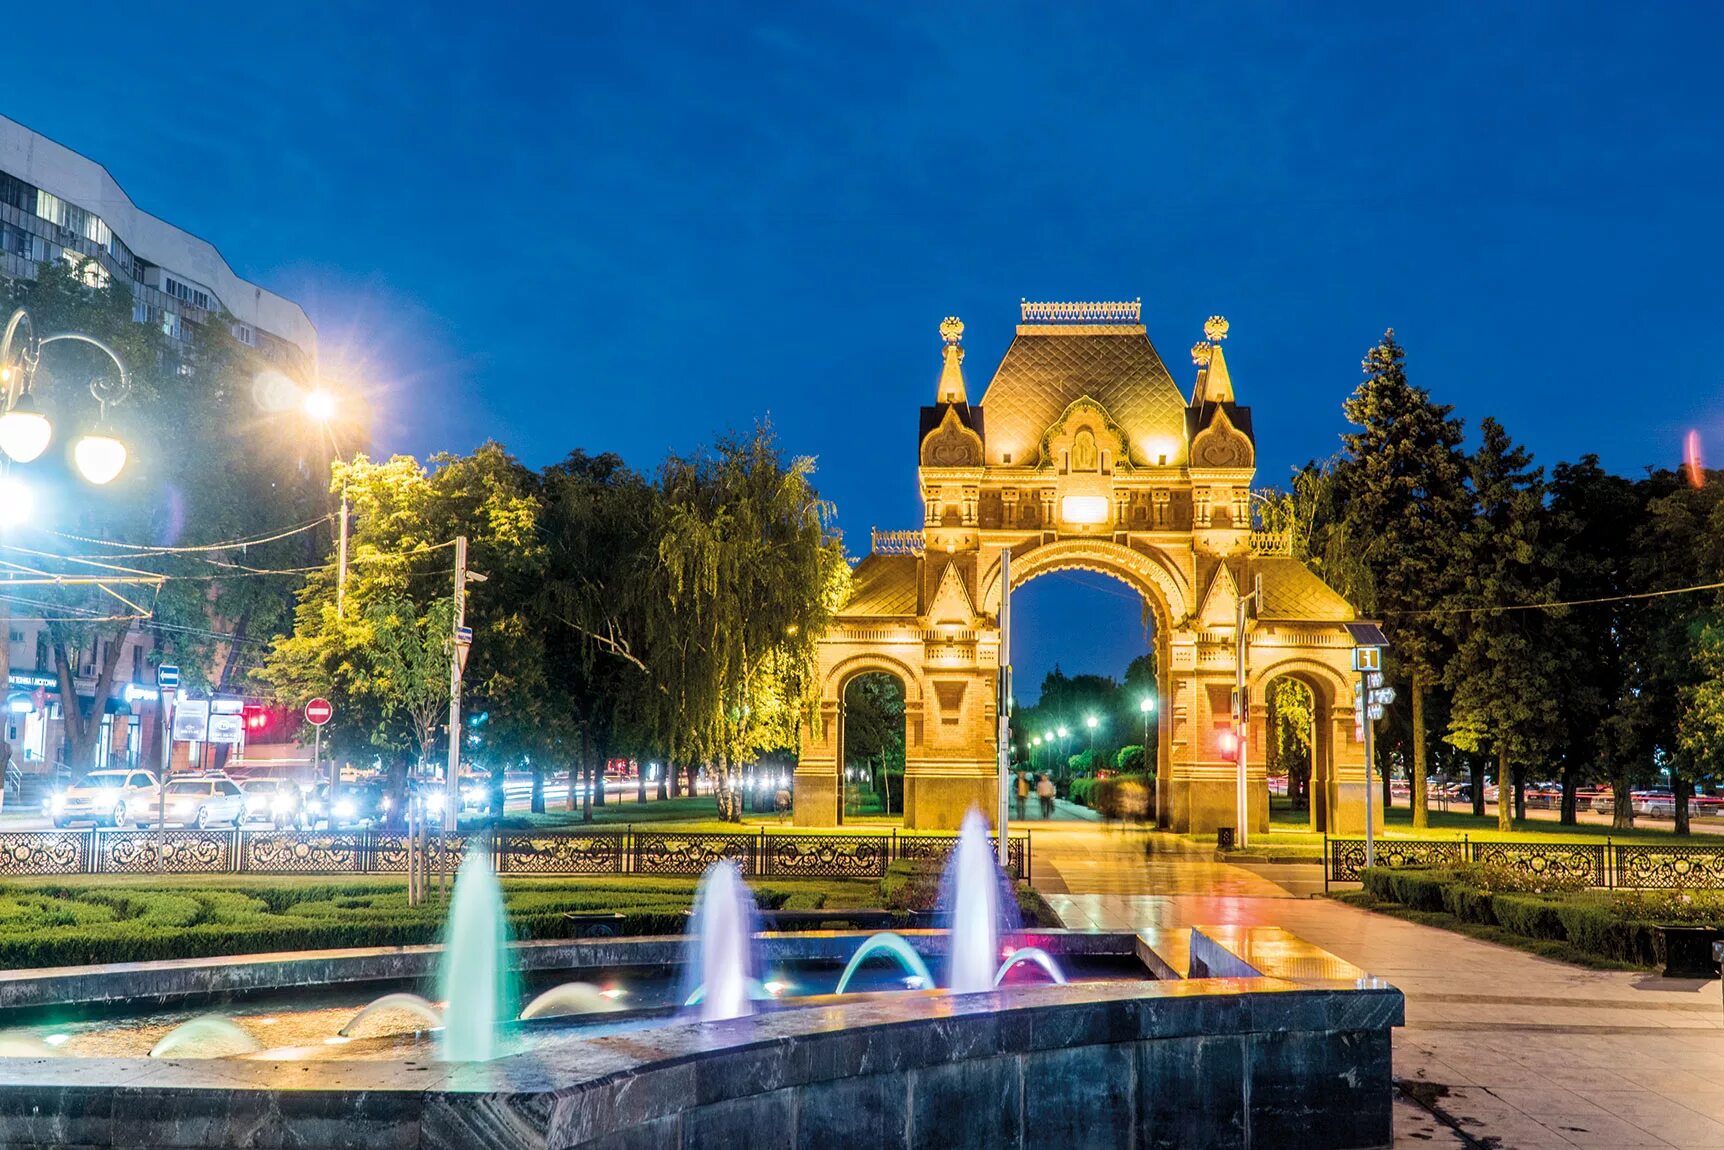 Где красиво в краснодаре. Краснодар город. Столица Краснодарского края. Триумфальная арка Краснодар. Улица красная Краснодар Триумфальная арка.